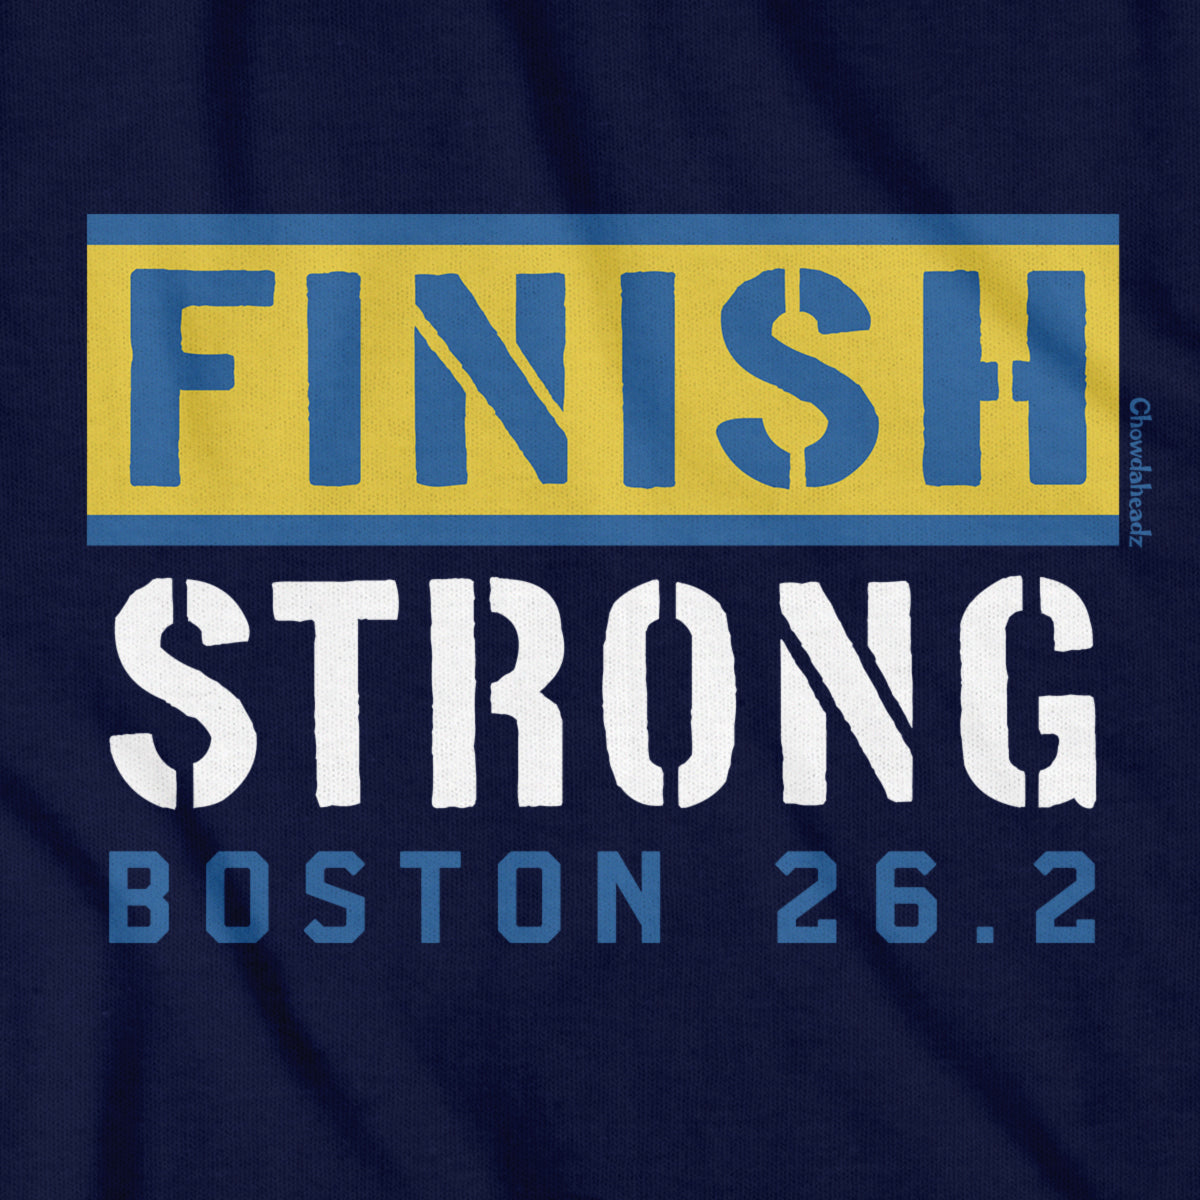 Finish Strong Boston 26.2 Youth T-Shirt - Chowdaheadz